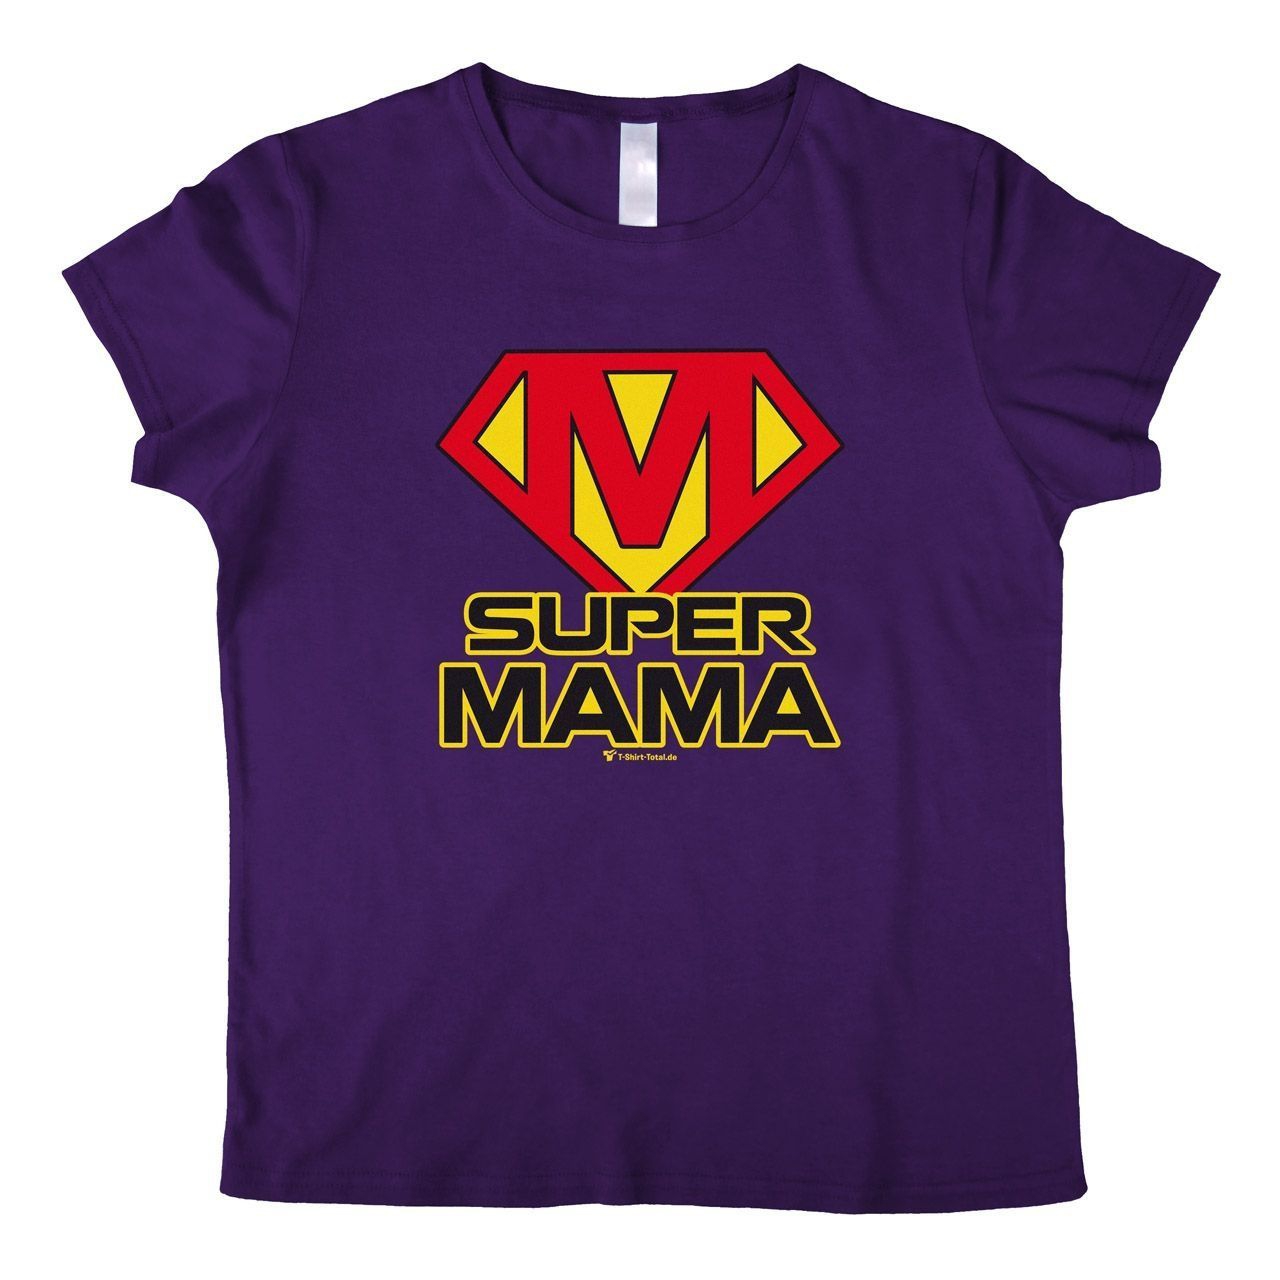 Super Mama Woman T-Shirt lila 2-Extra Large